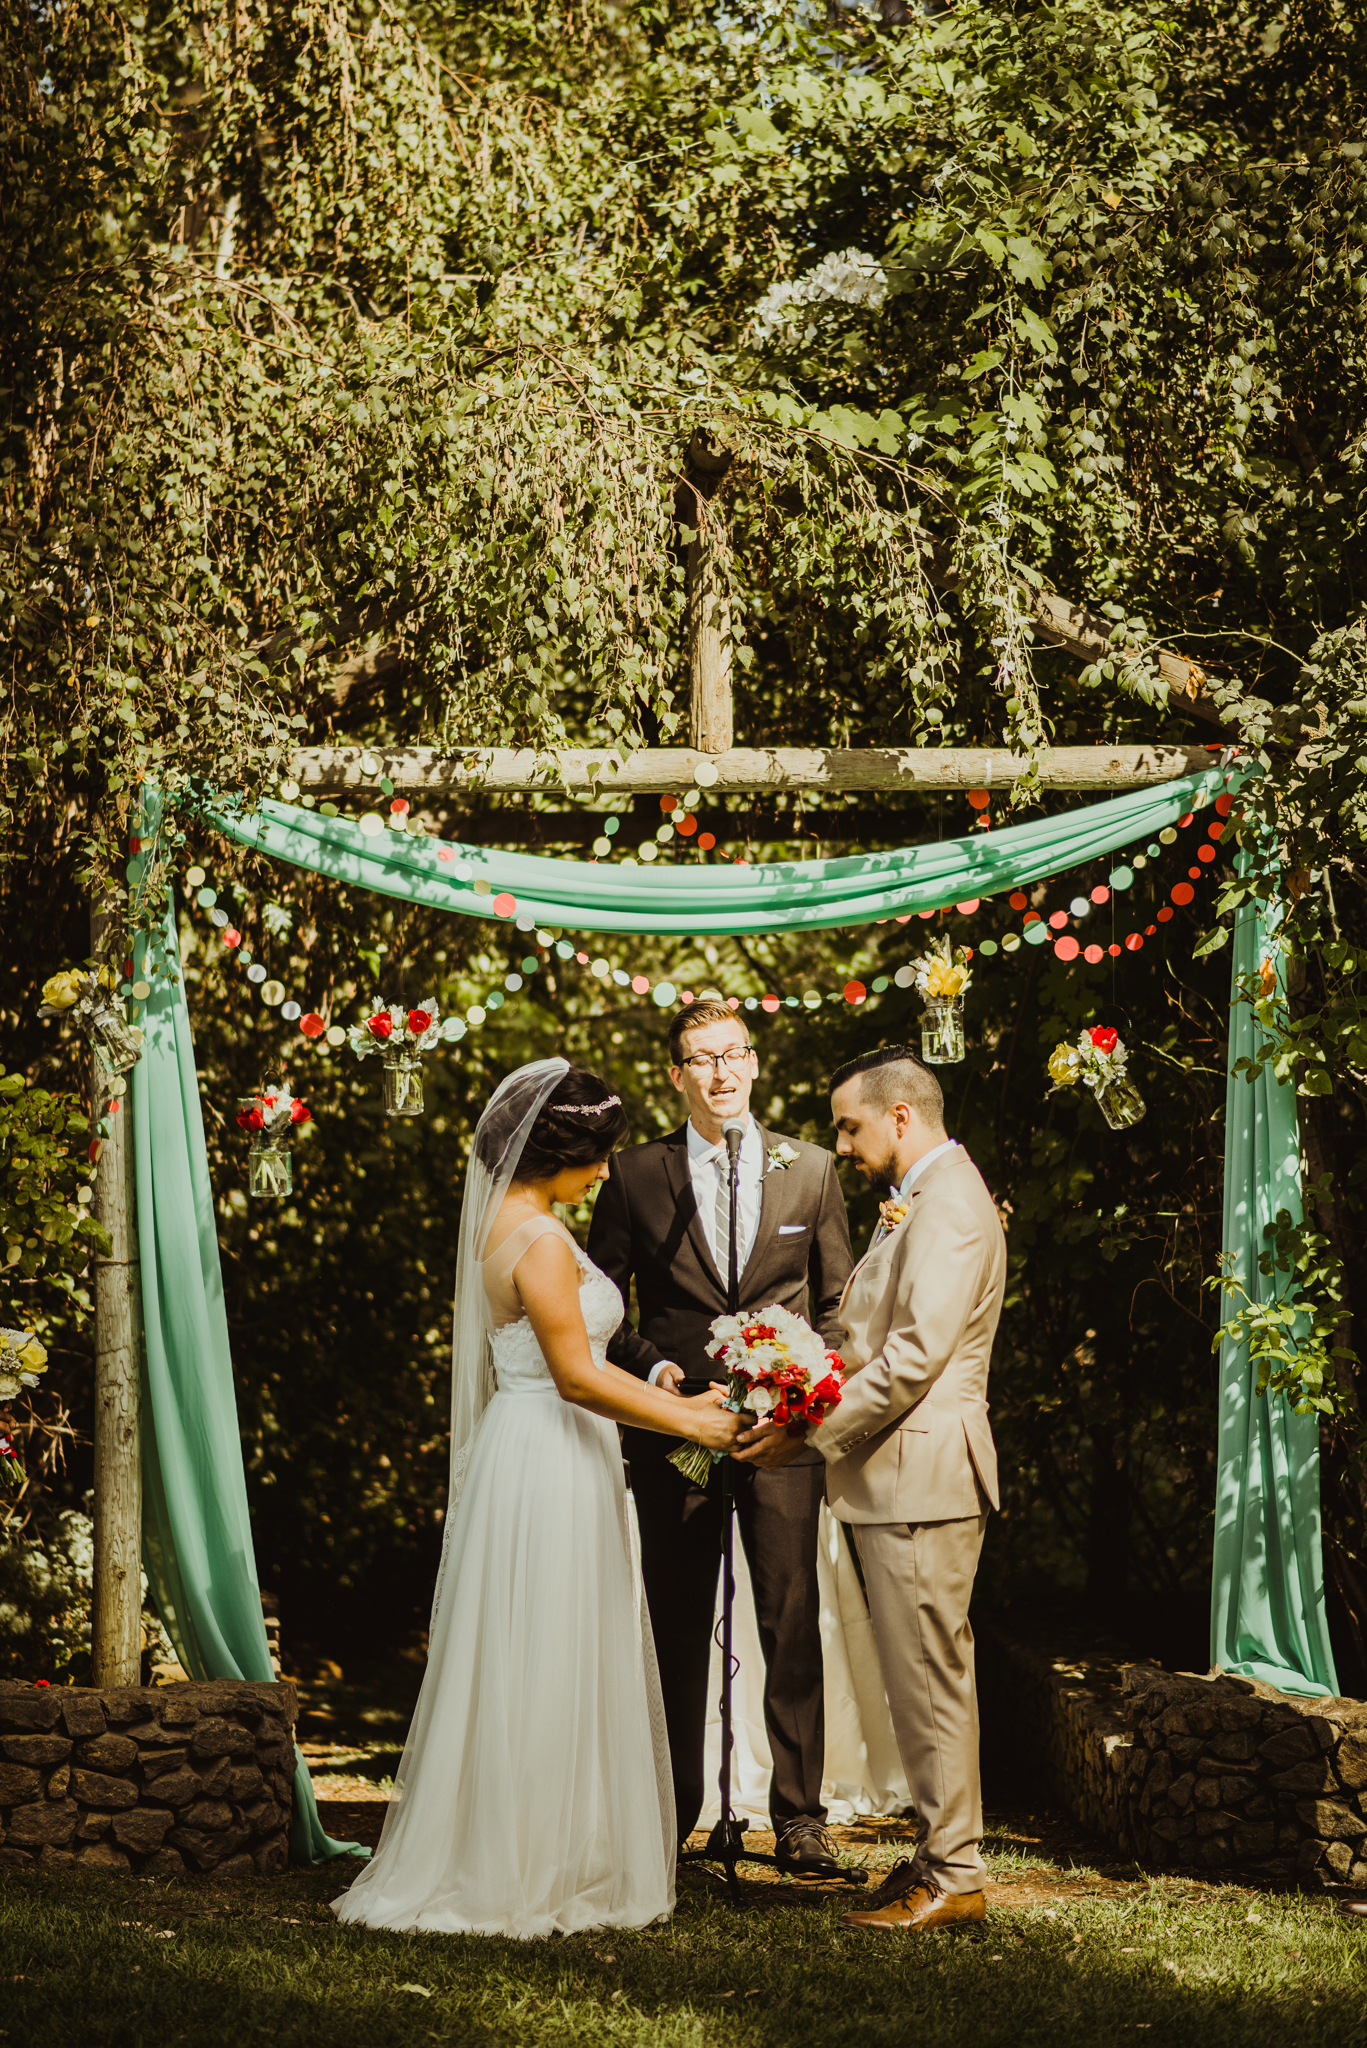 ©Isaiah + Taylor Photography - Brendan + Stefana, Quail Haven Farm Wedding, Vista-60.jpg